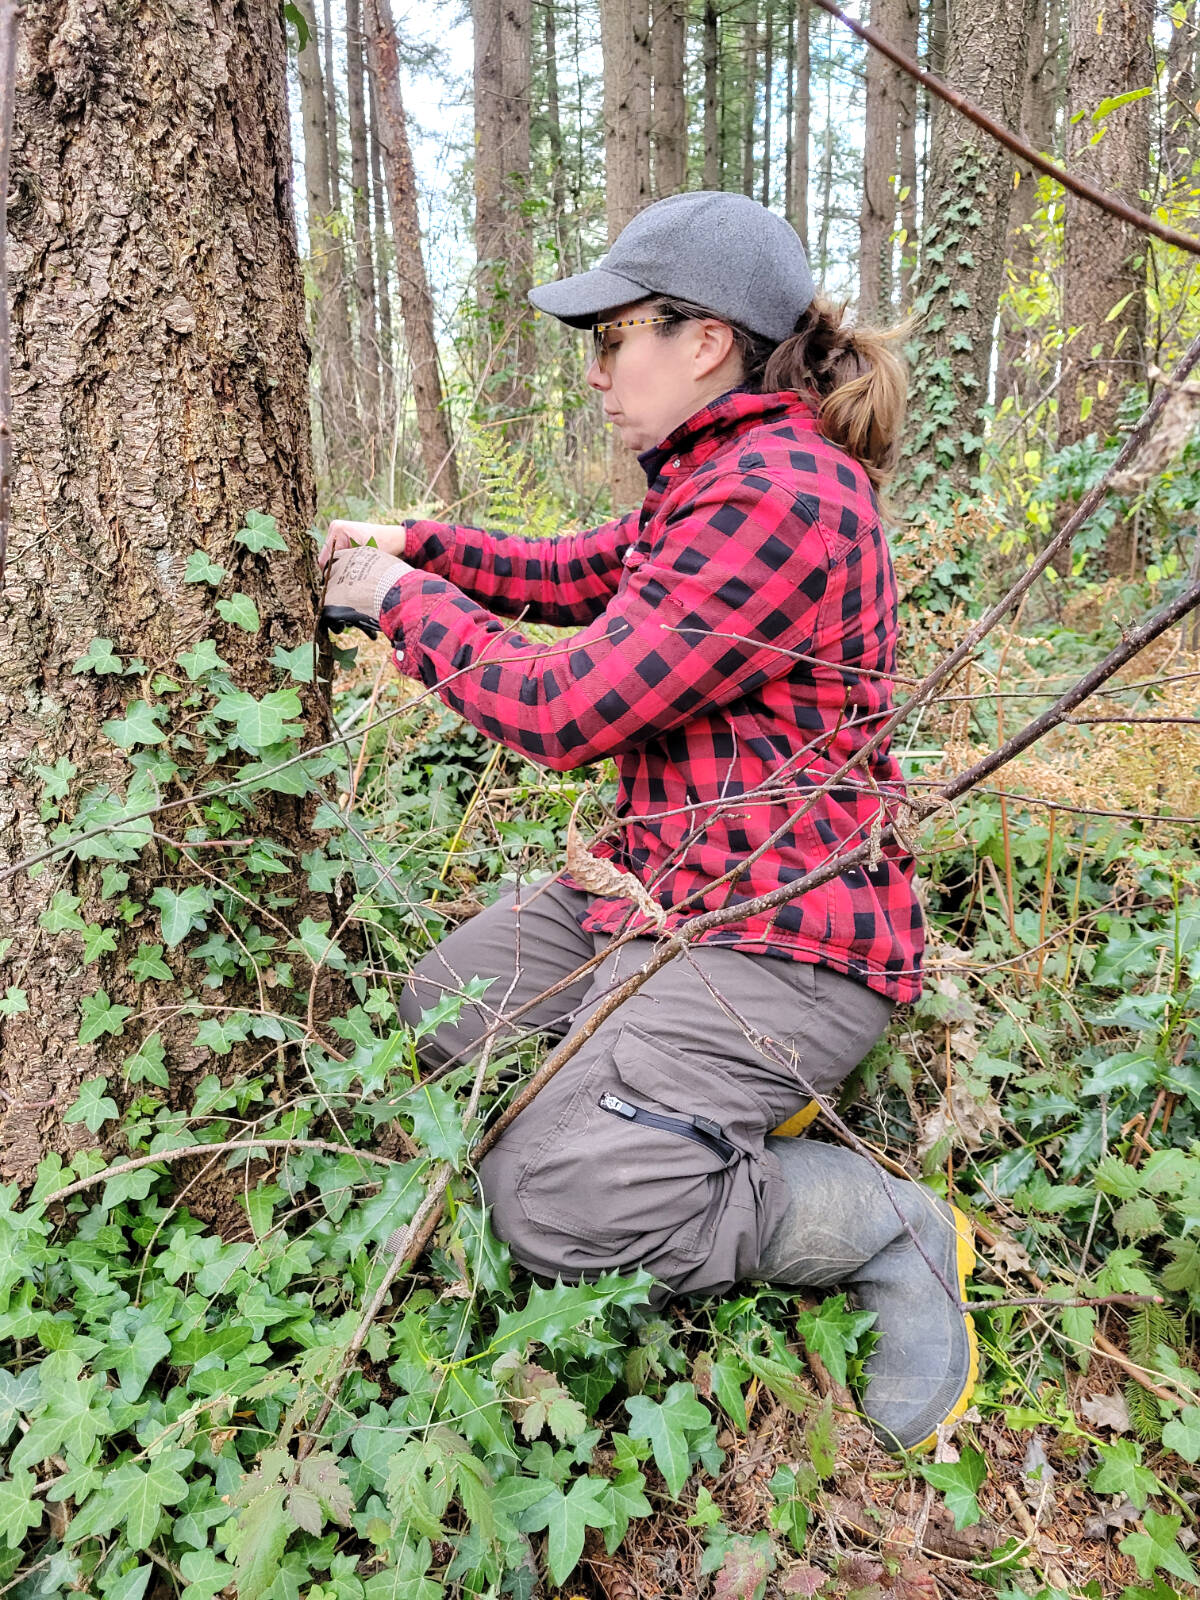 On Sunday, Nov. 20, Alexandra Falconer, garden programs coordinator at Langley Environmental Partners Society (LEPS) was pulling ivy off trees in Aldergroves Steele park. (Dan Ferguson/Langley Advance Times)